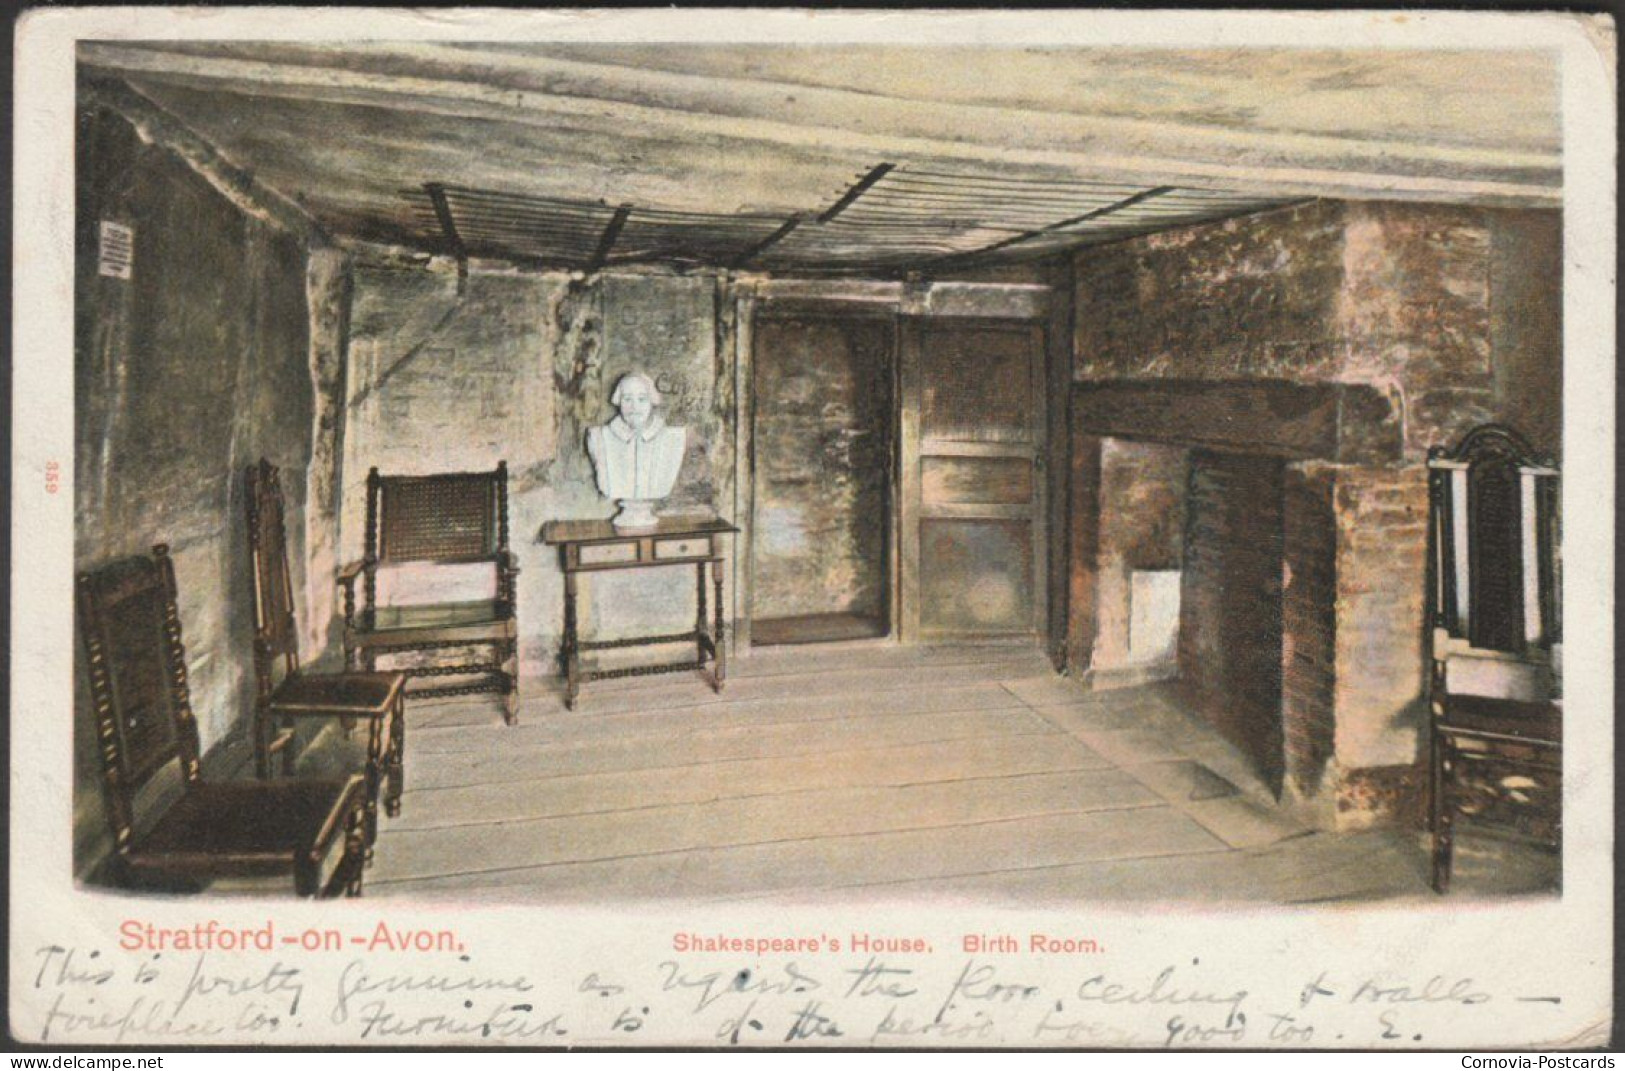 Birth Room, Shakespeare's House, Stratford-on-Avon, 1903 - Peacock Postcard - Stratford Upon Avon